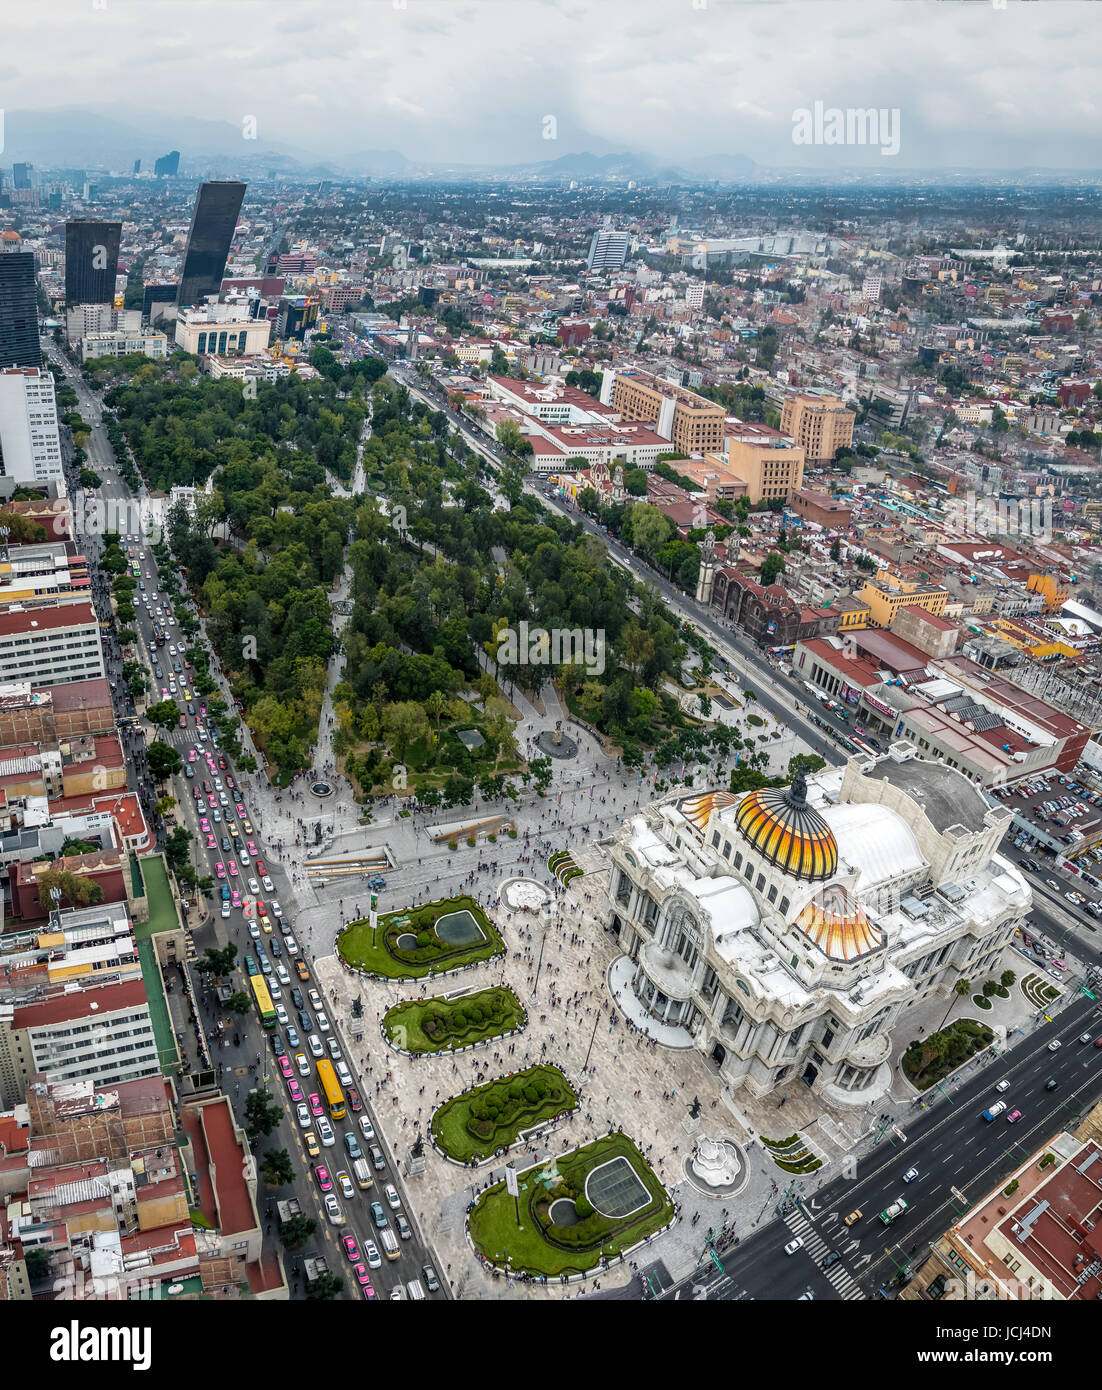 Aerial view of Mexico City and The Palace of Fine Arts (Palacio de Bellas Artes) - Mexico City, Mexico Stock Photo